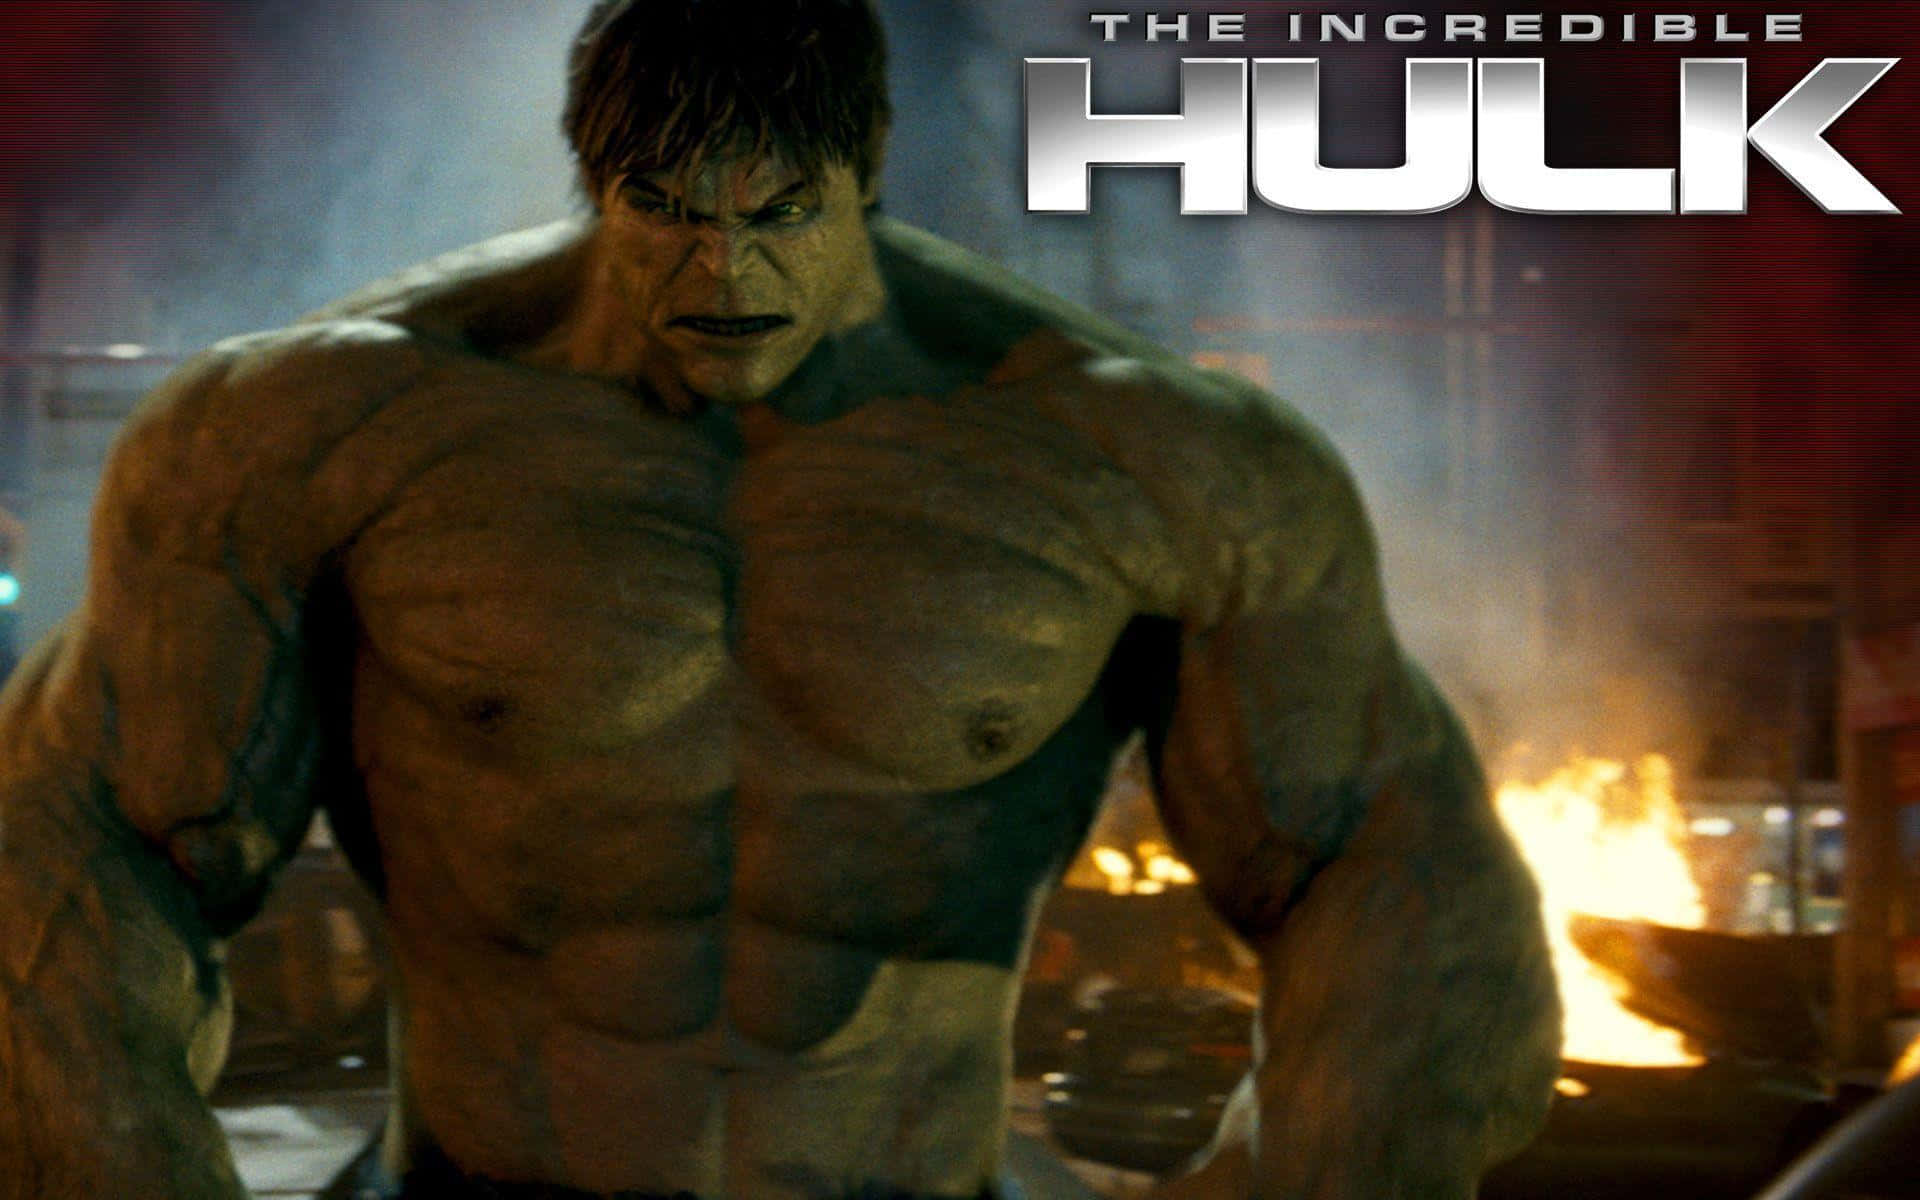 Behold the Incredible Hulk!